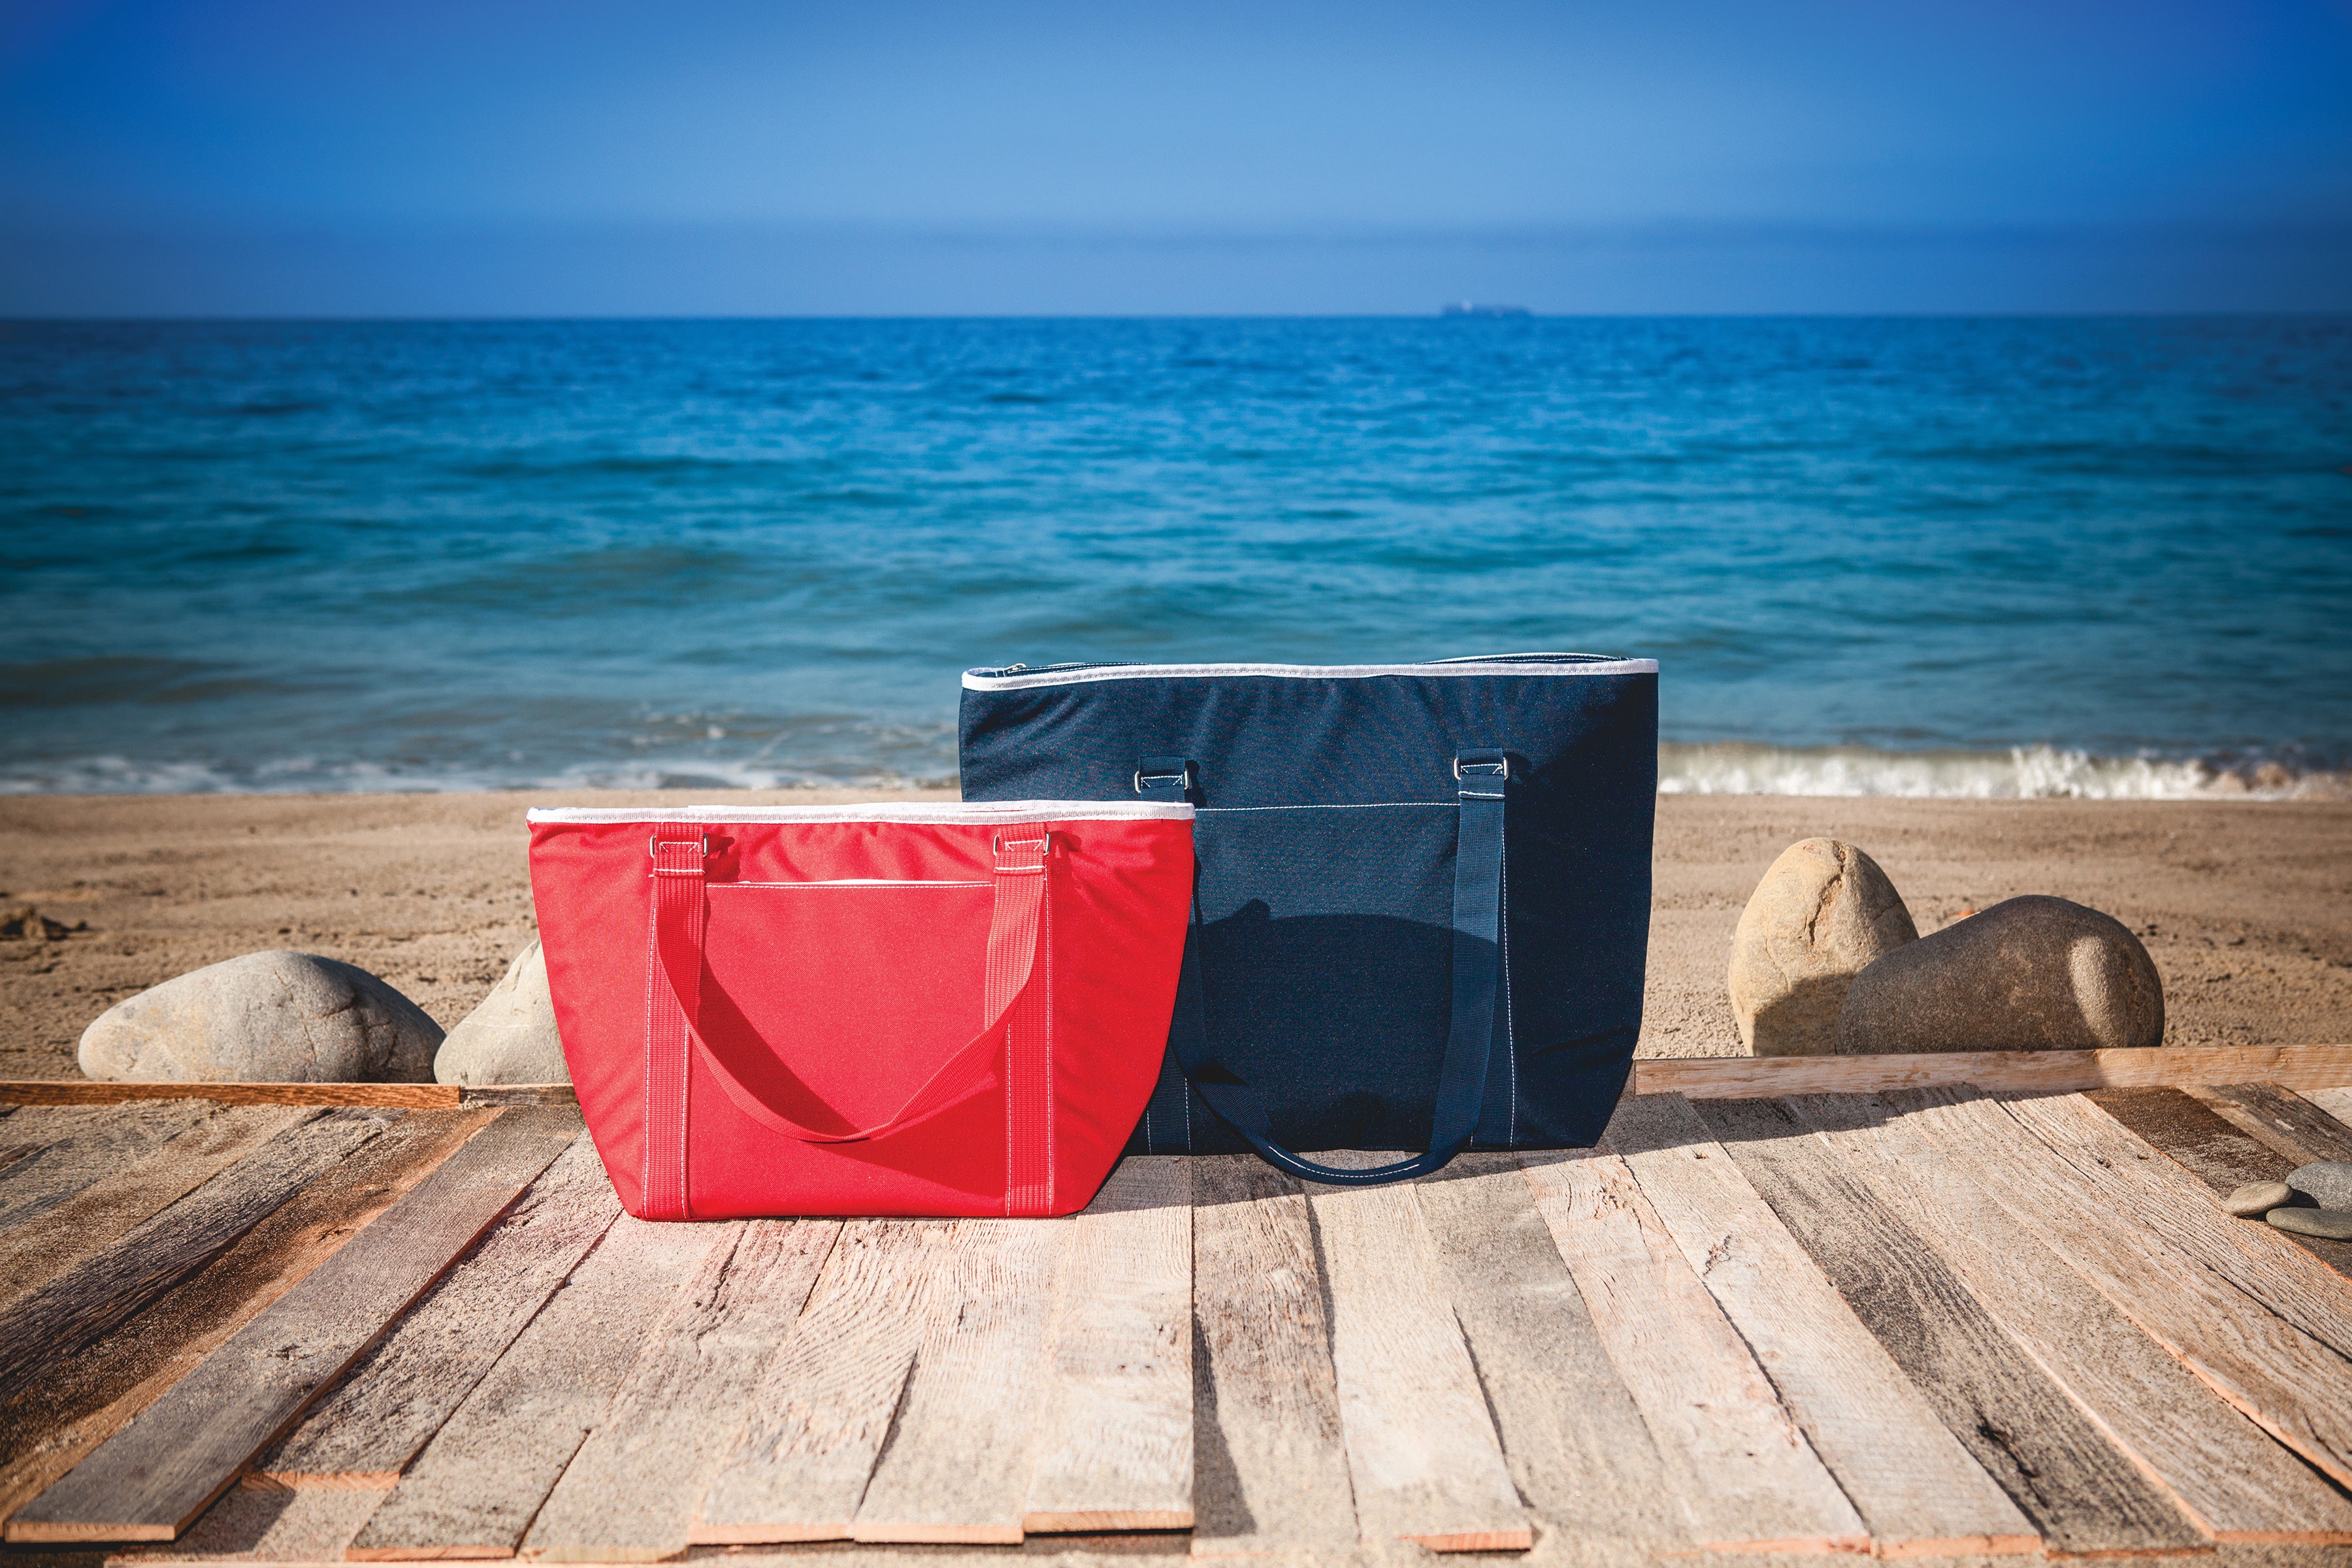 Cornell Big Red - Topanga Cooler Tote Bag